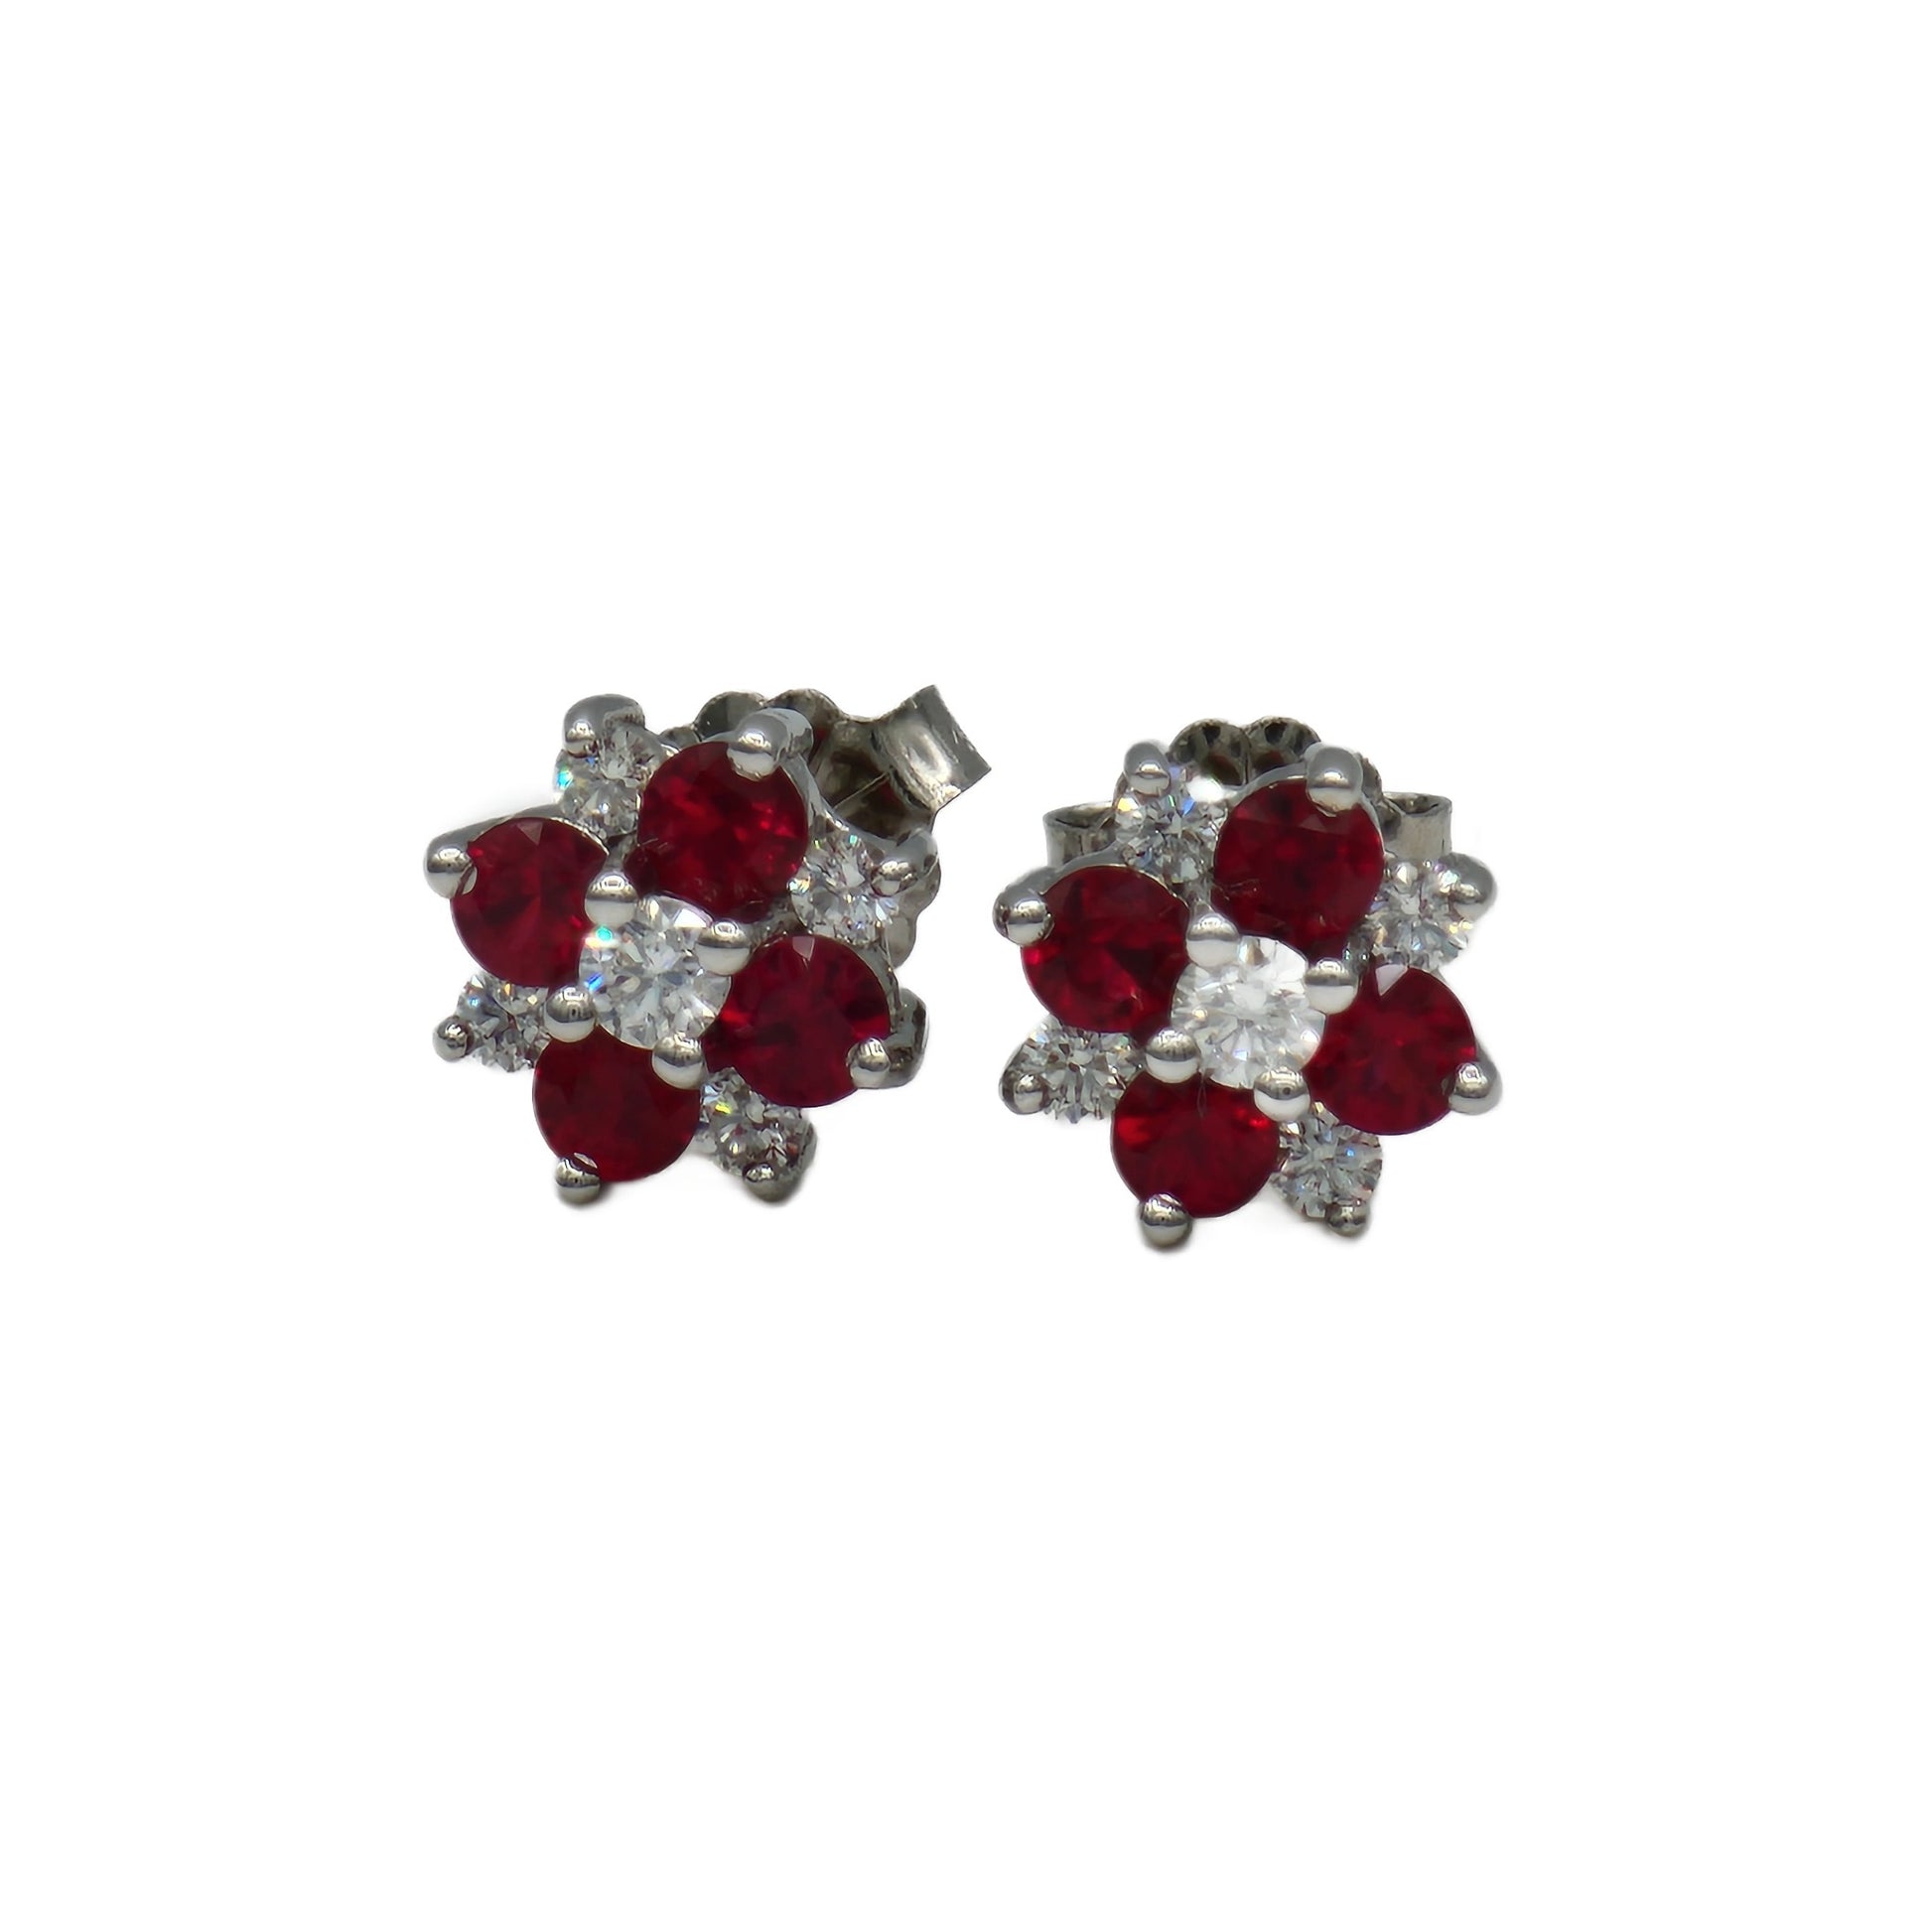 14K Ruby and Diamond Cluster Earrings